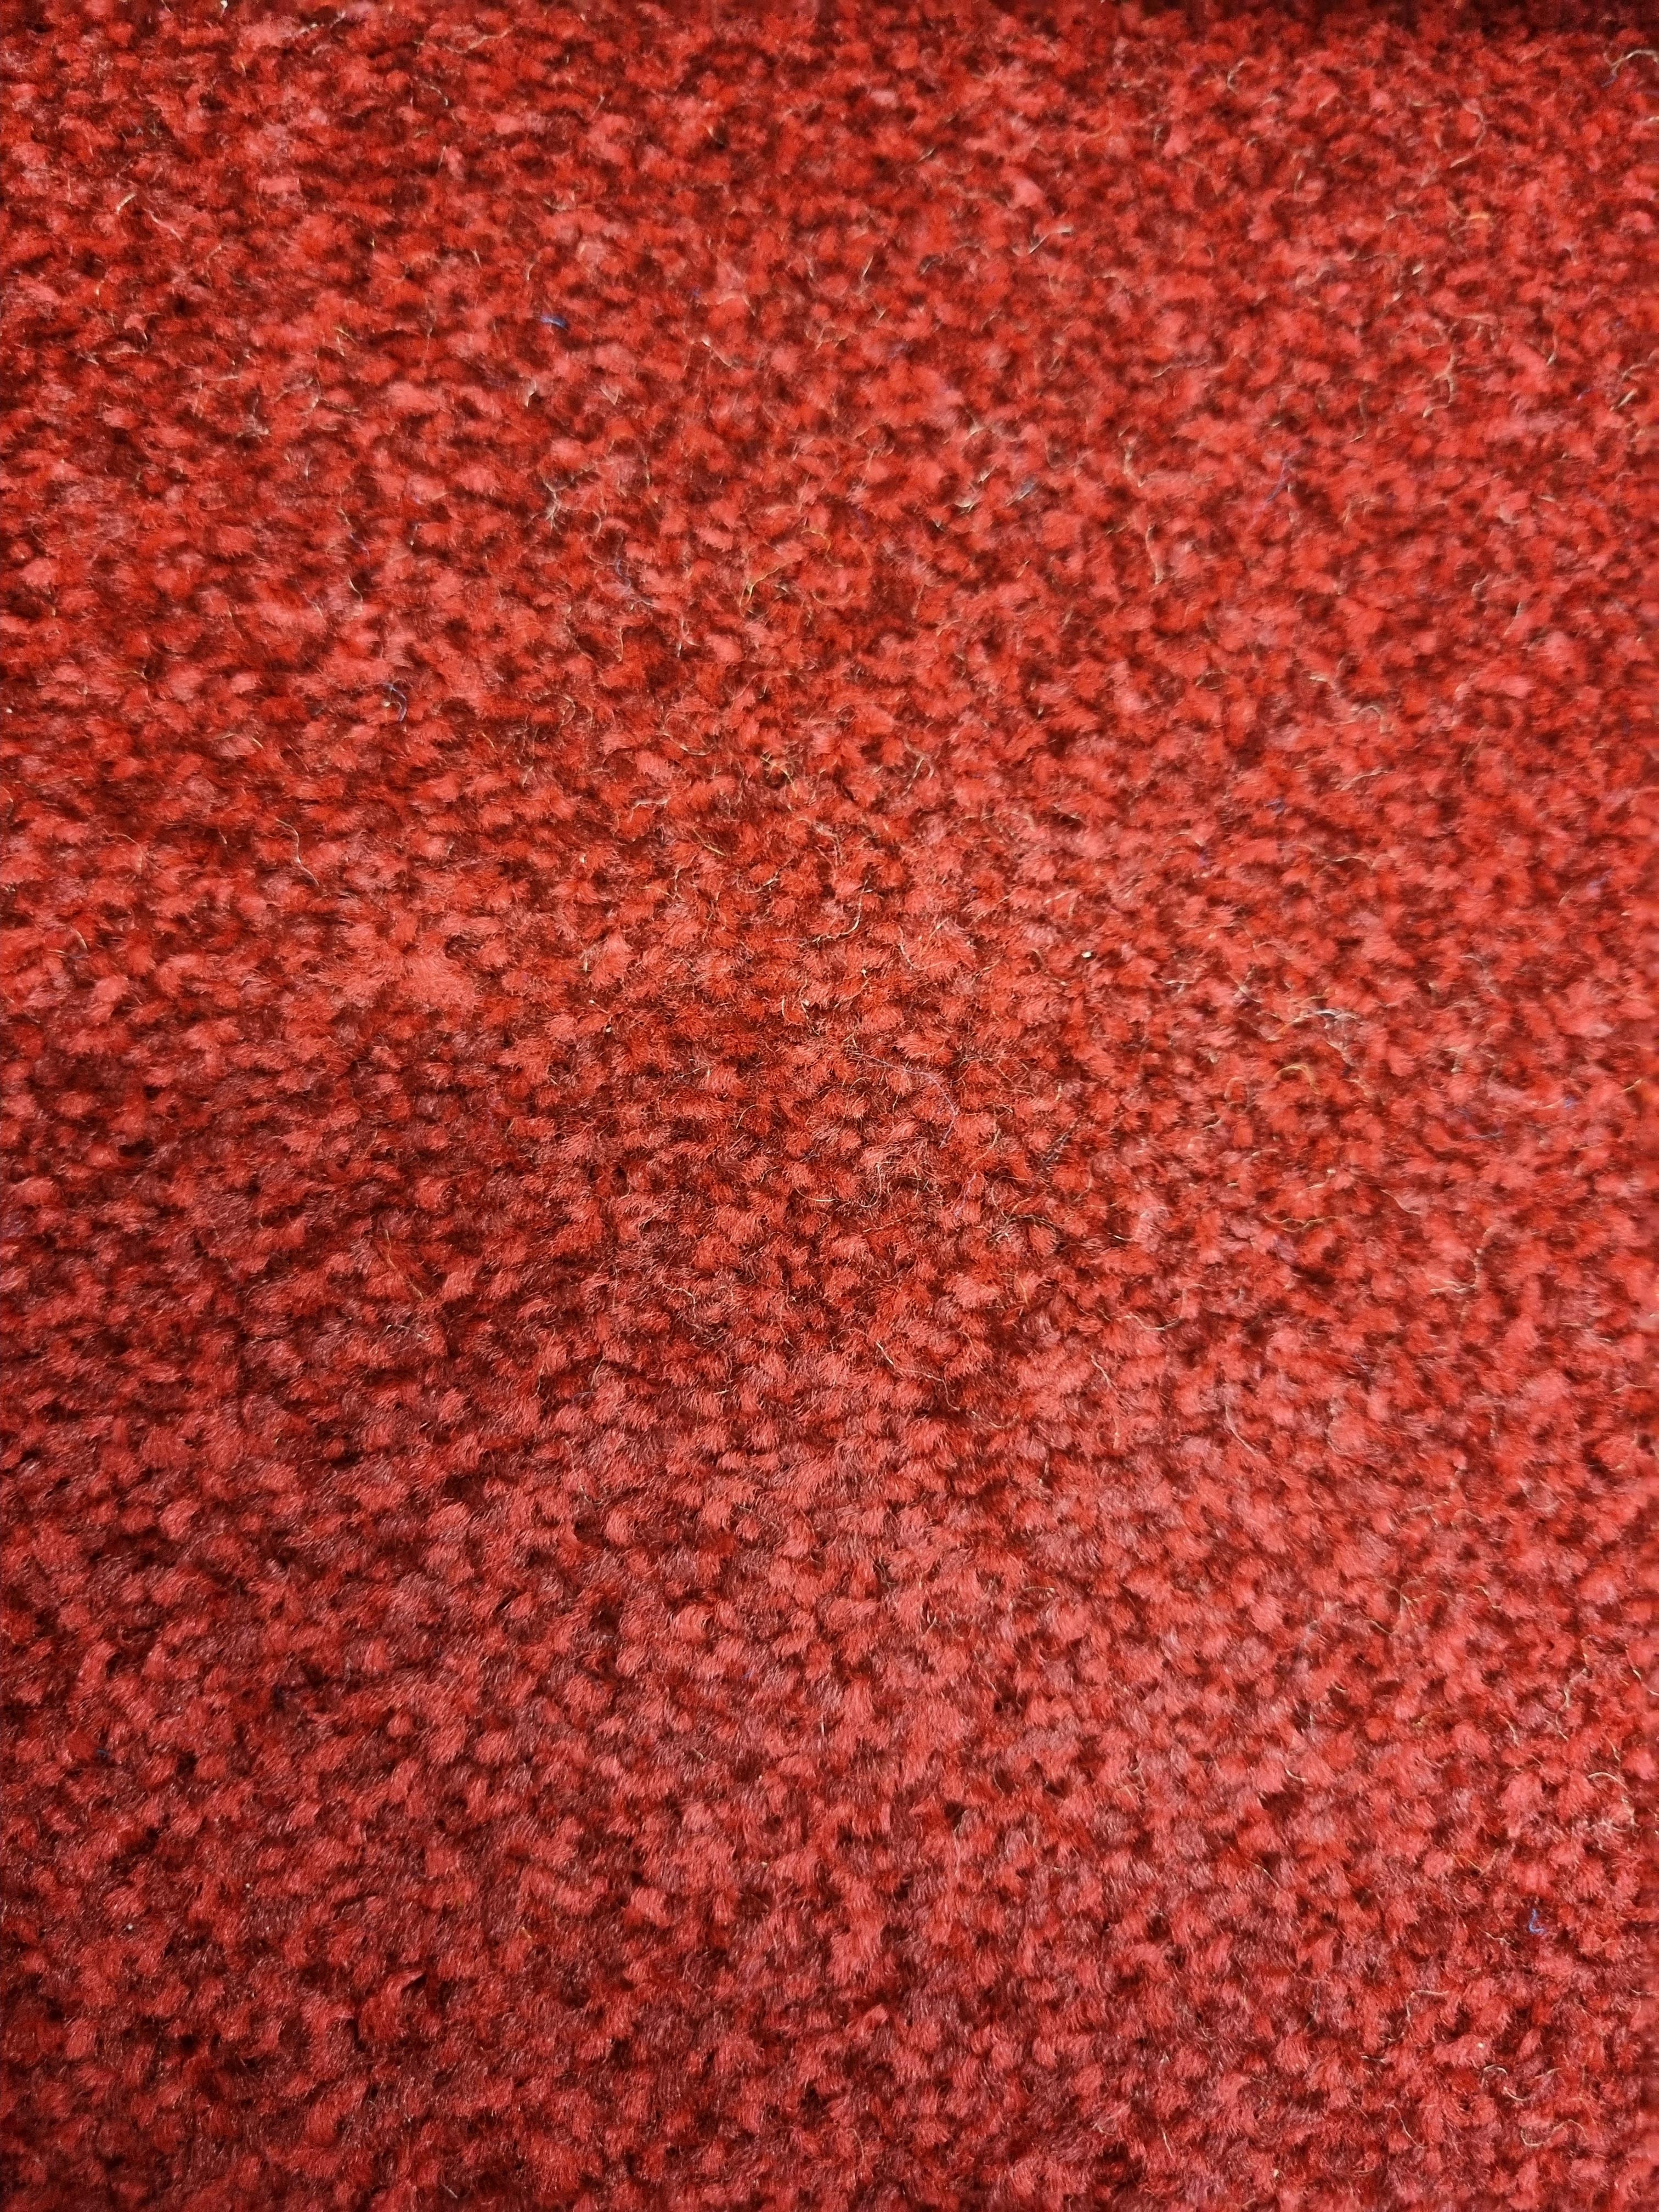 firework carpet